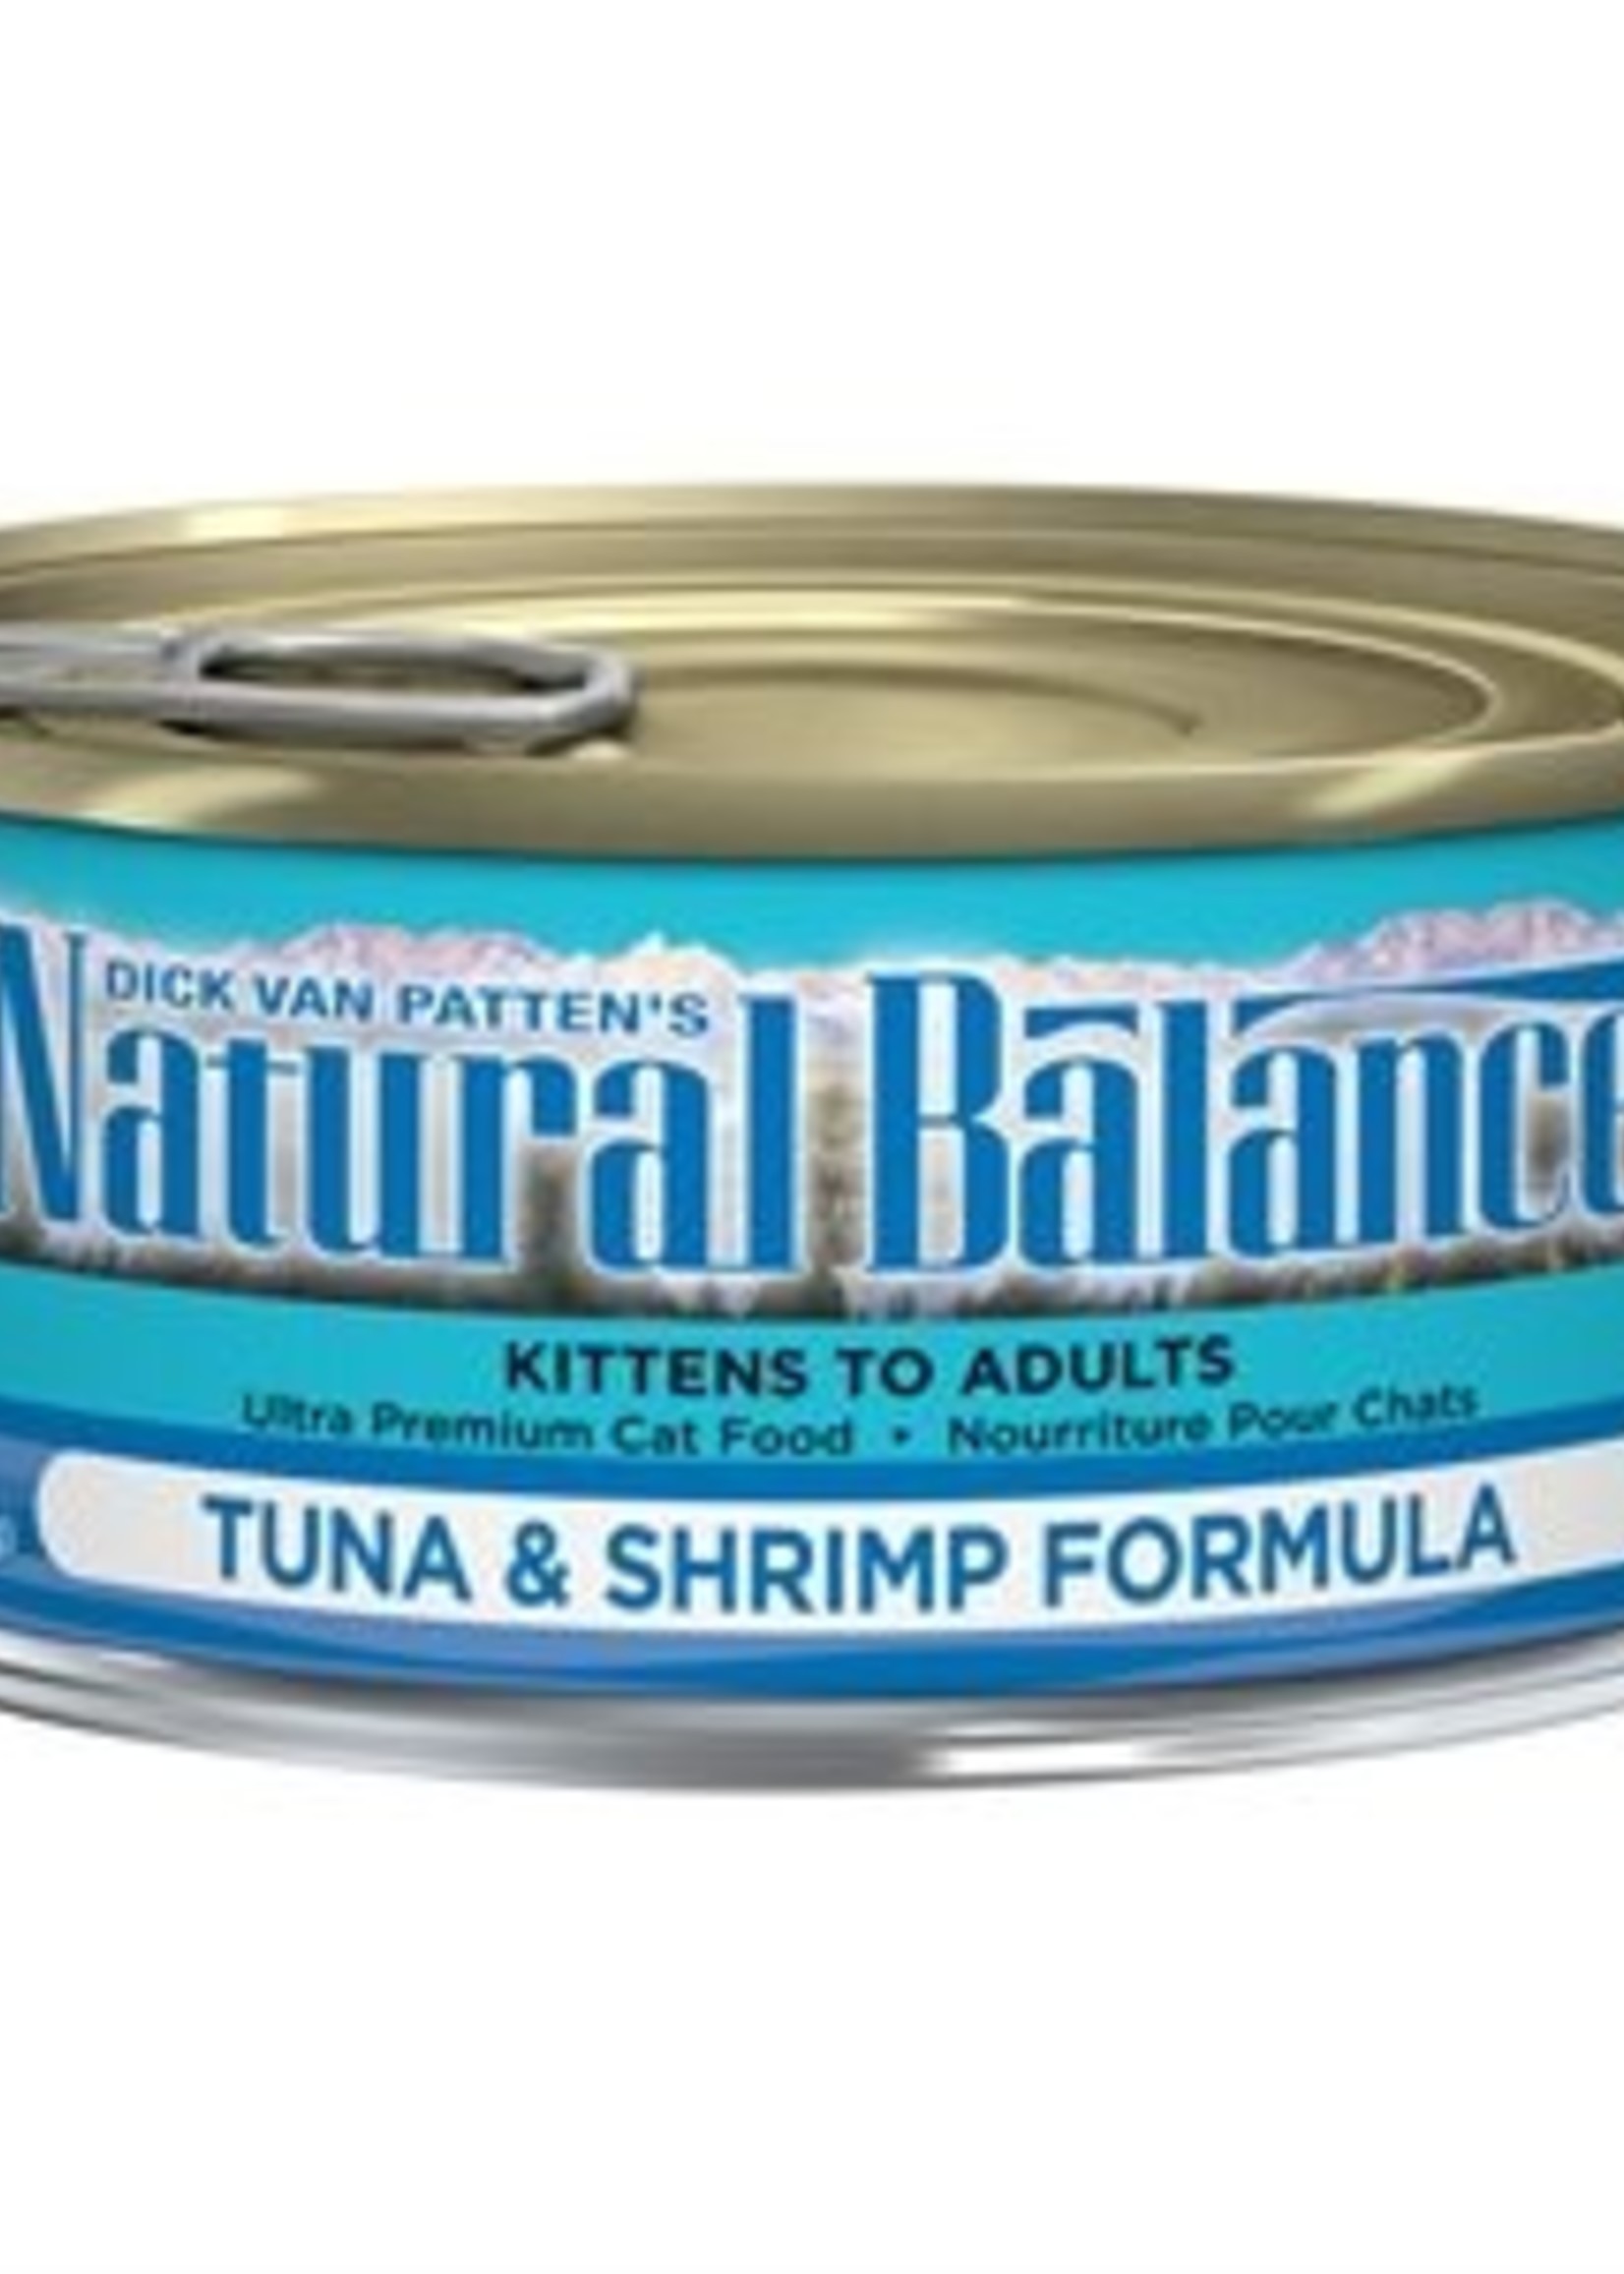 Natural Balance® NATURAL BALANCE TUNA & SHRIMP FORMULA 5.5oz